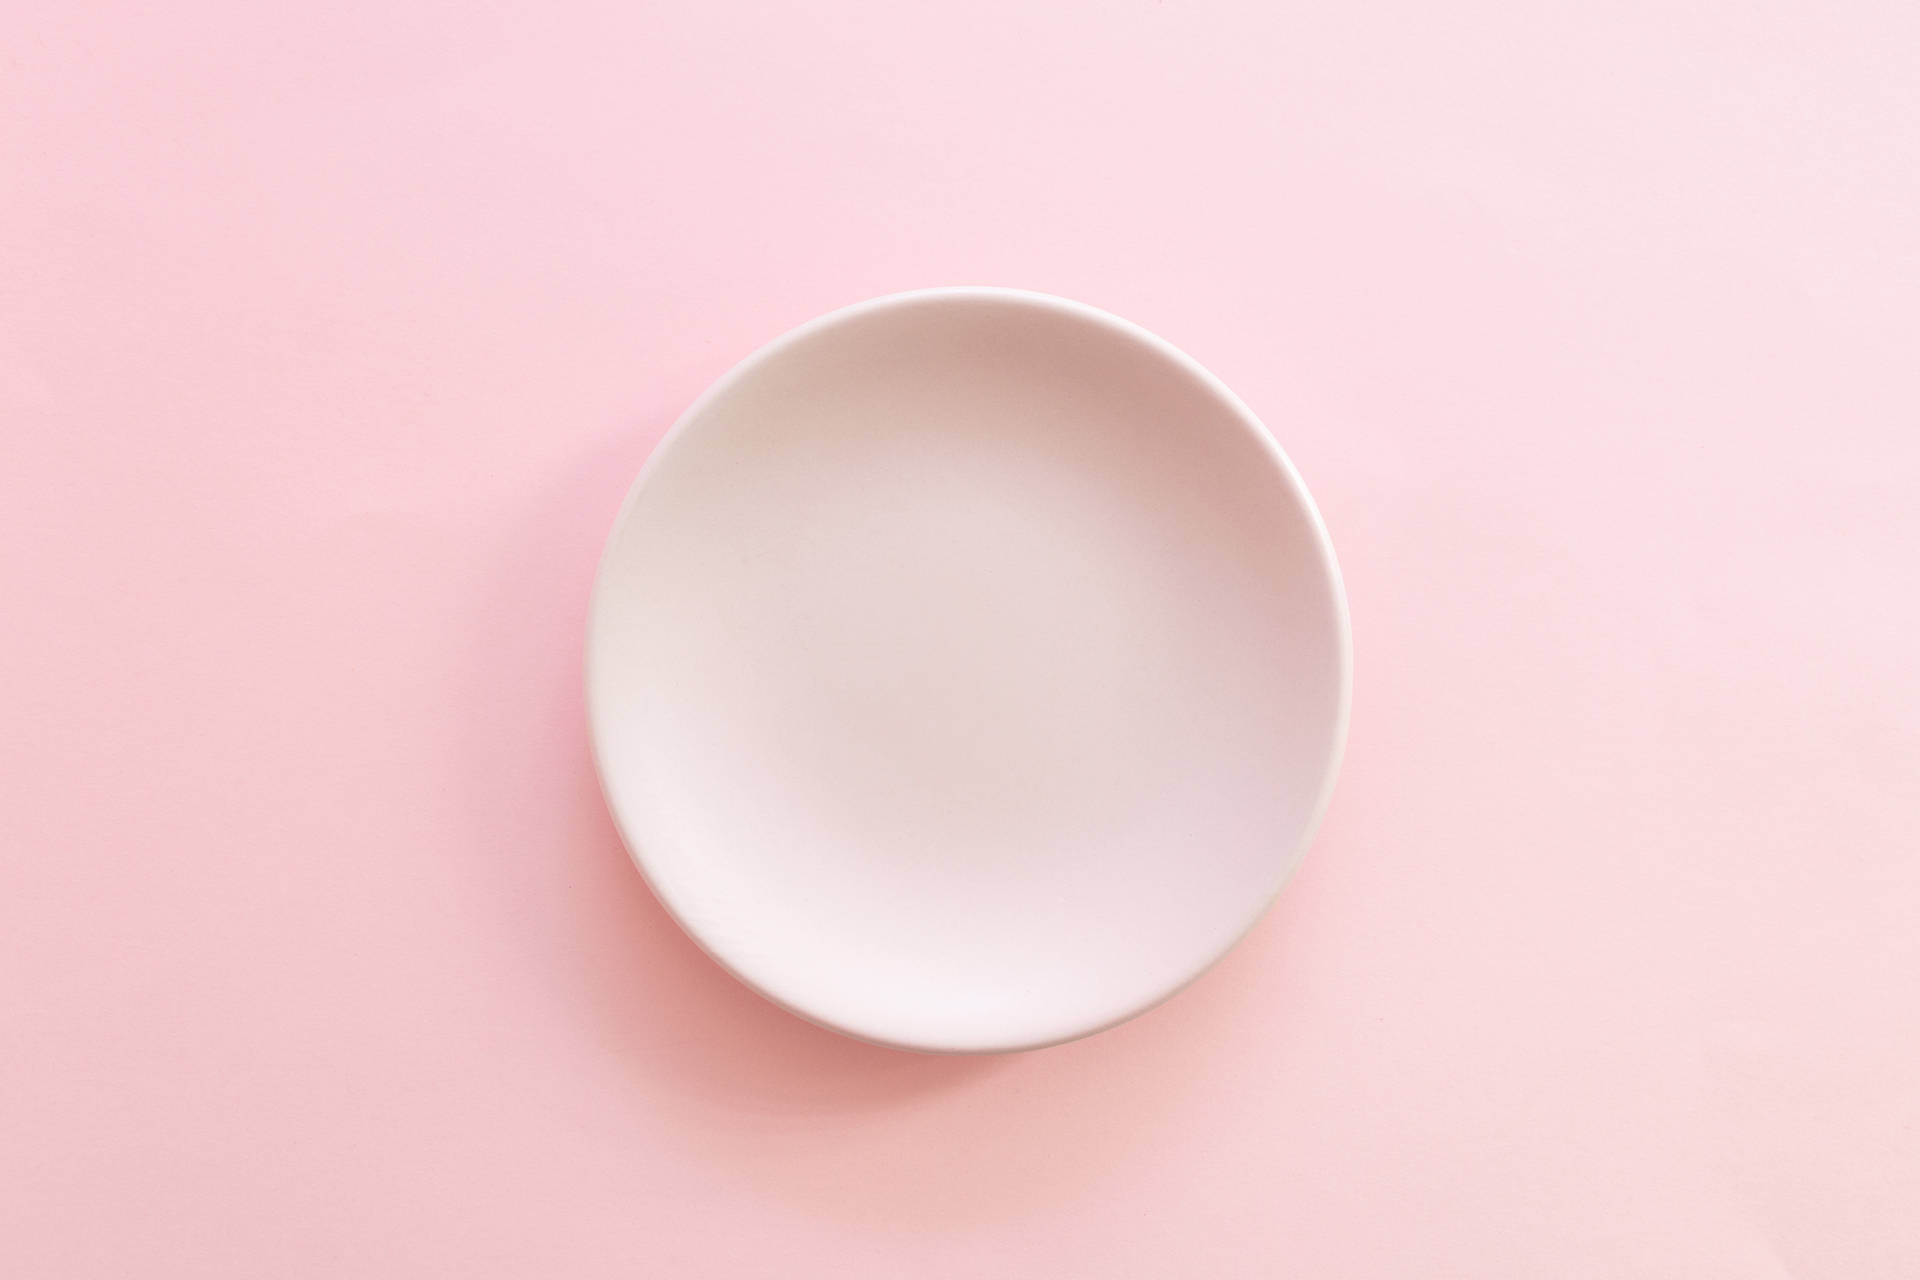 Minimalist Aesthetic Pink Plate Background